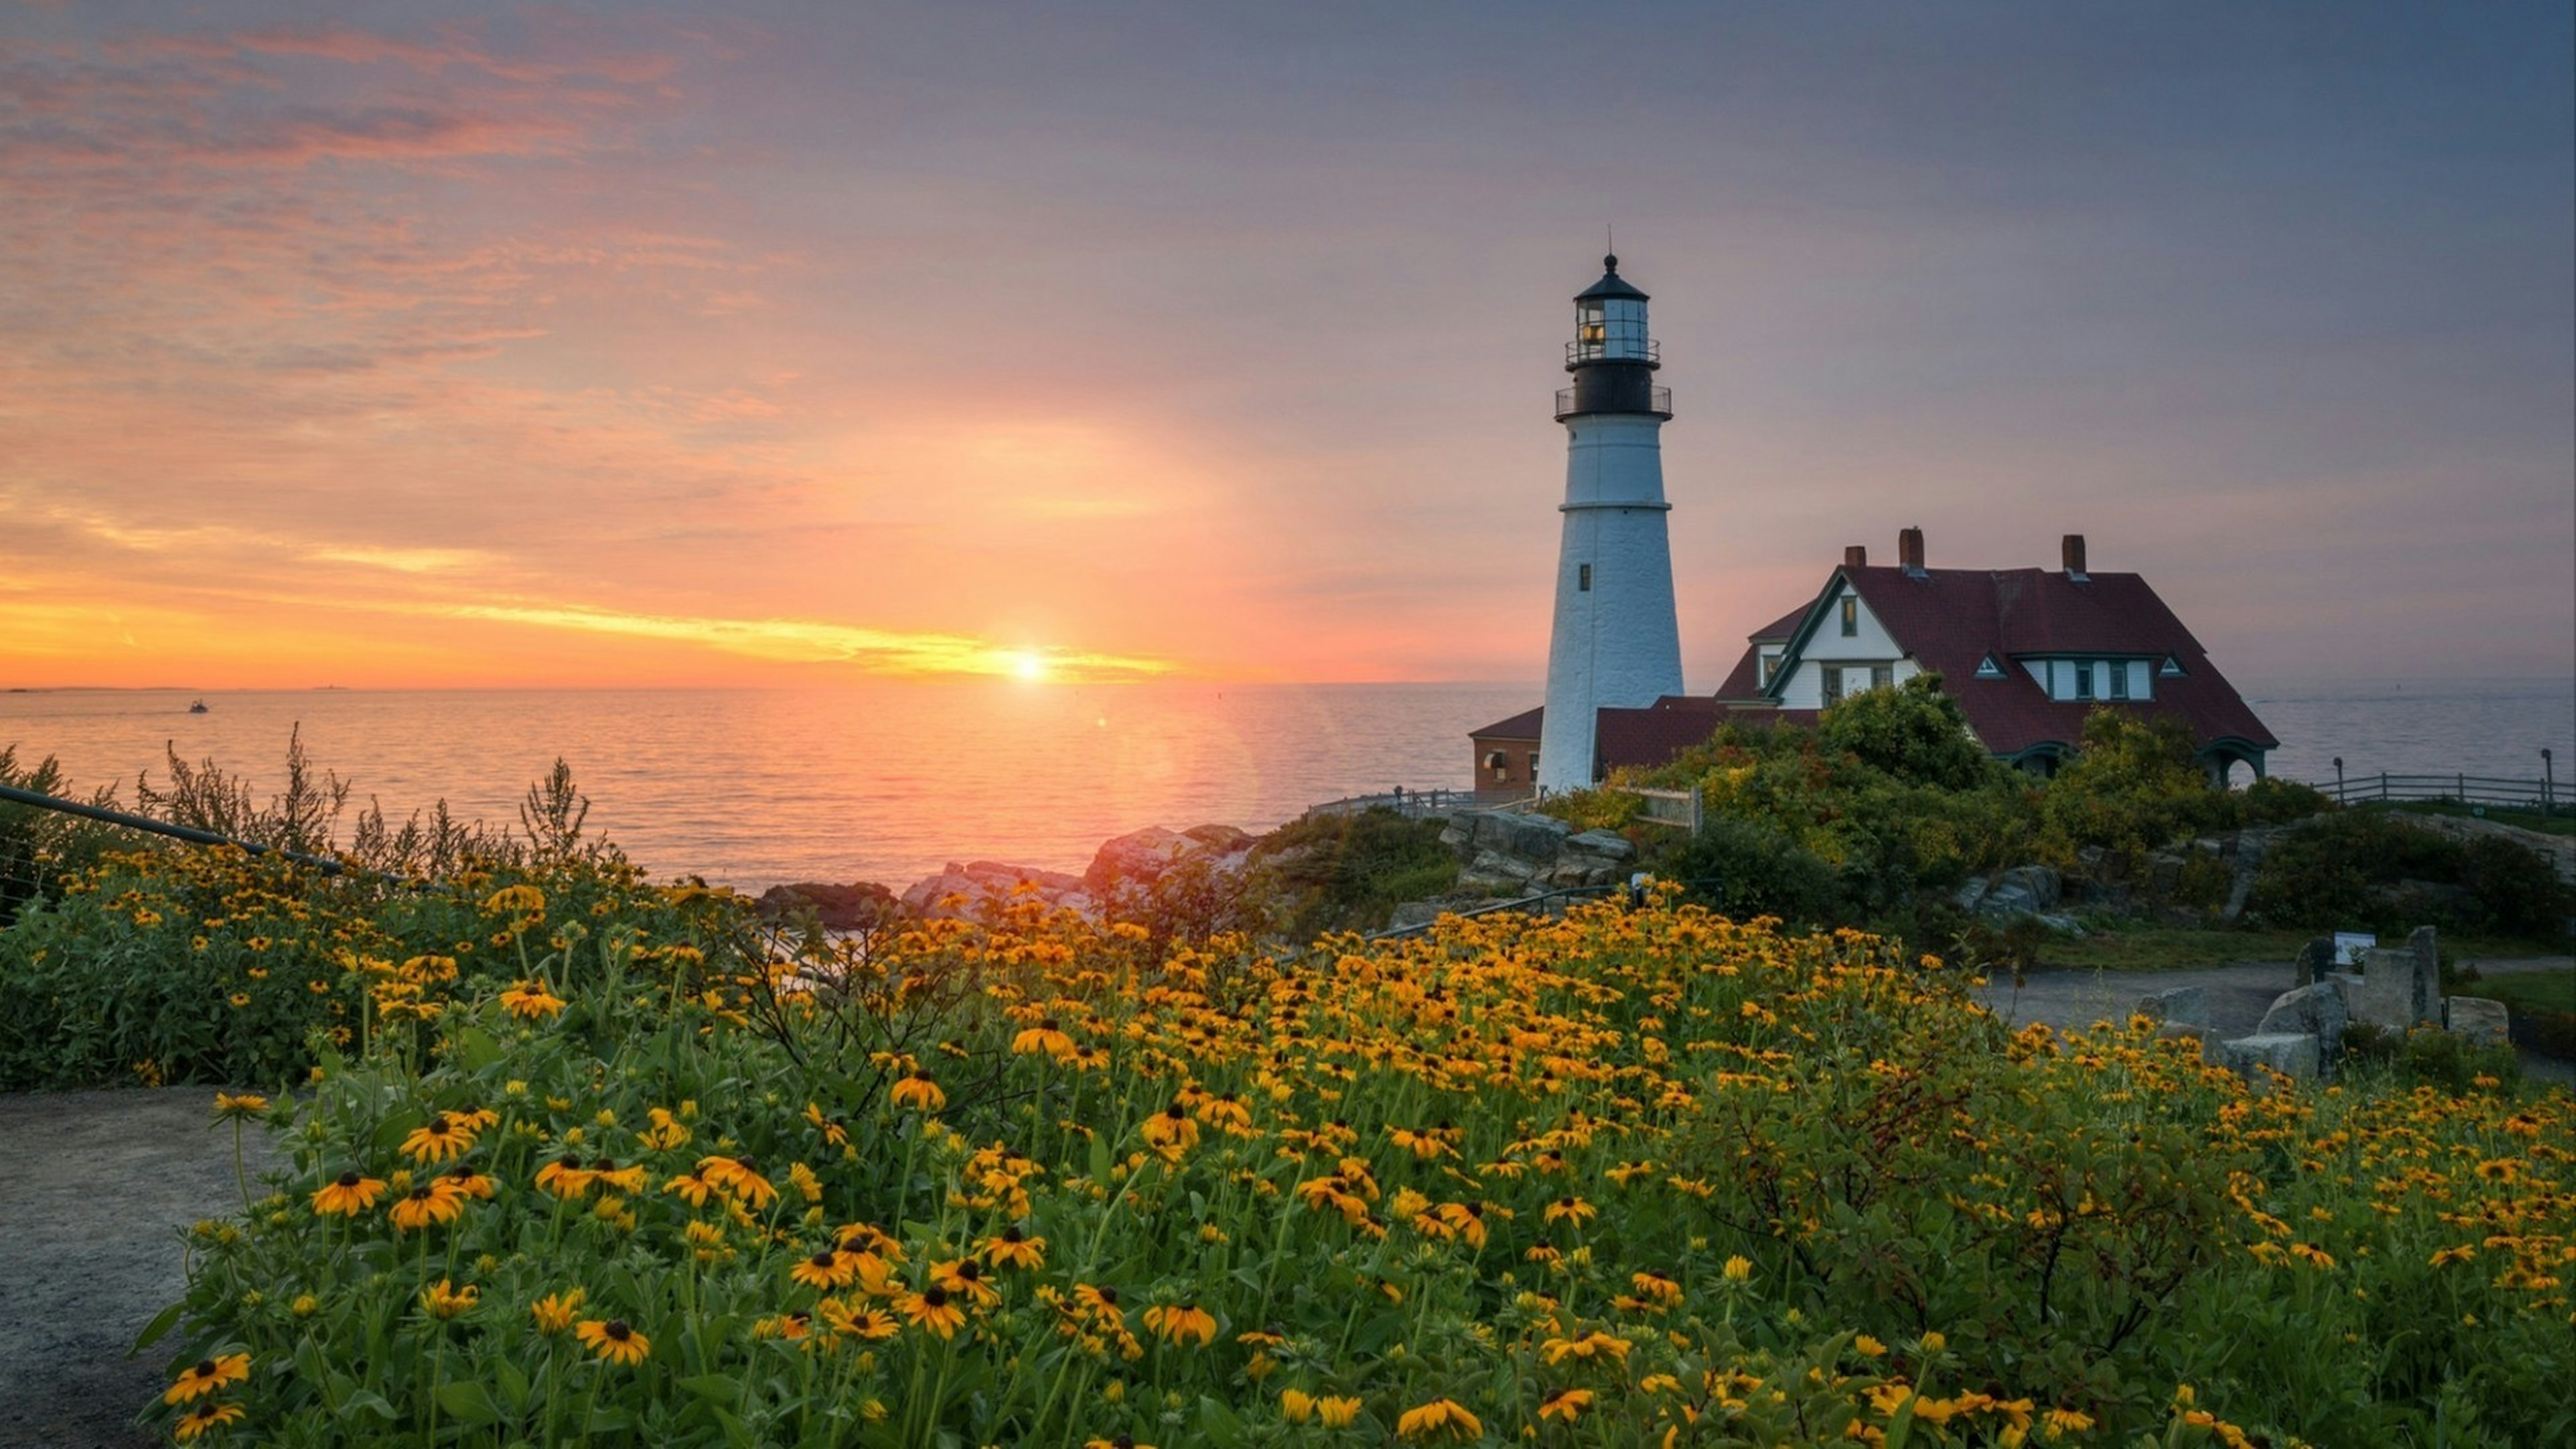 Sunrise at Portland Head Lighthouse in Maine.